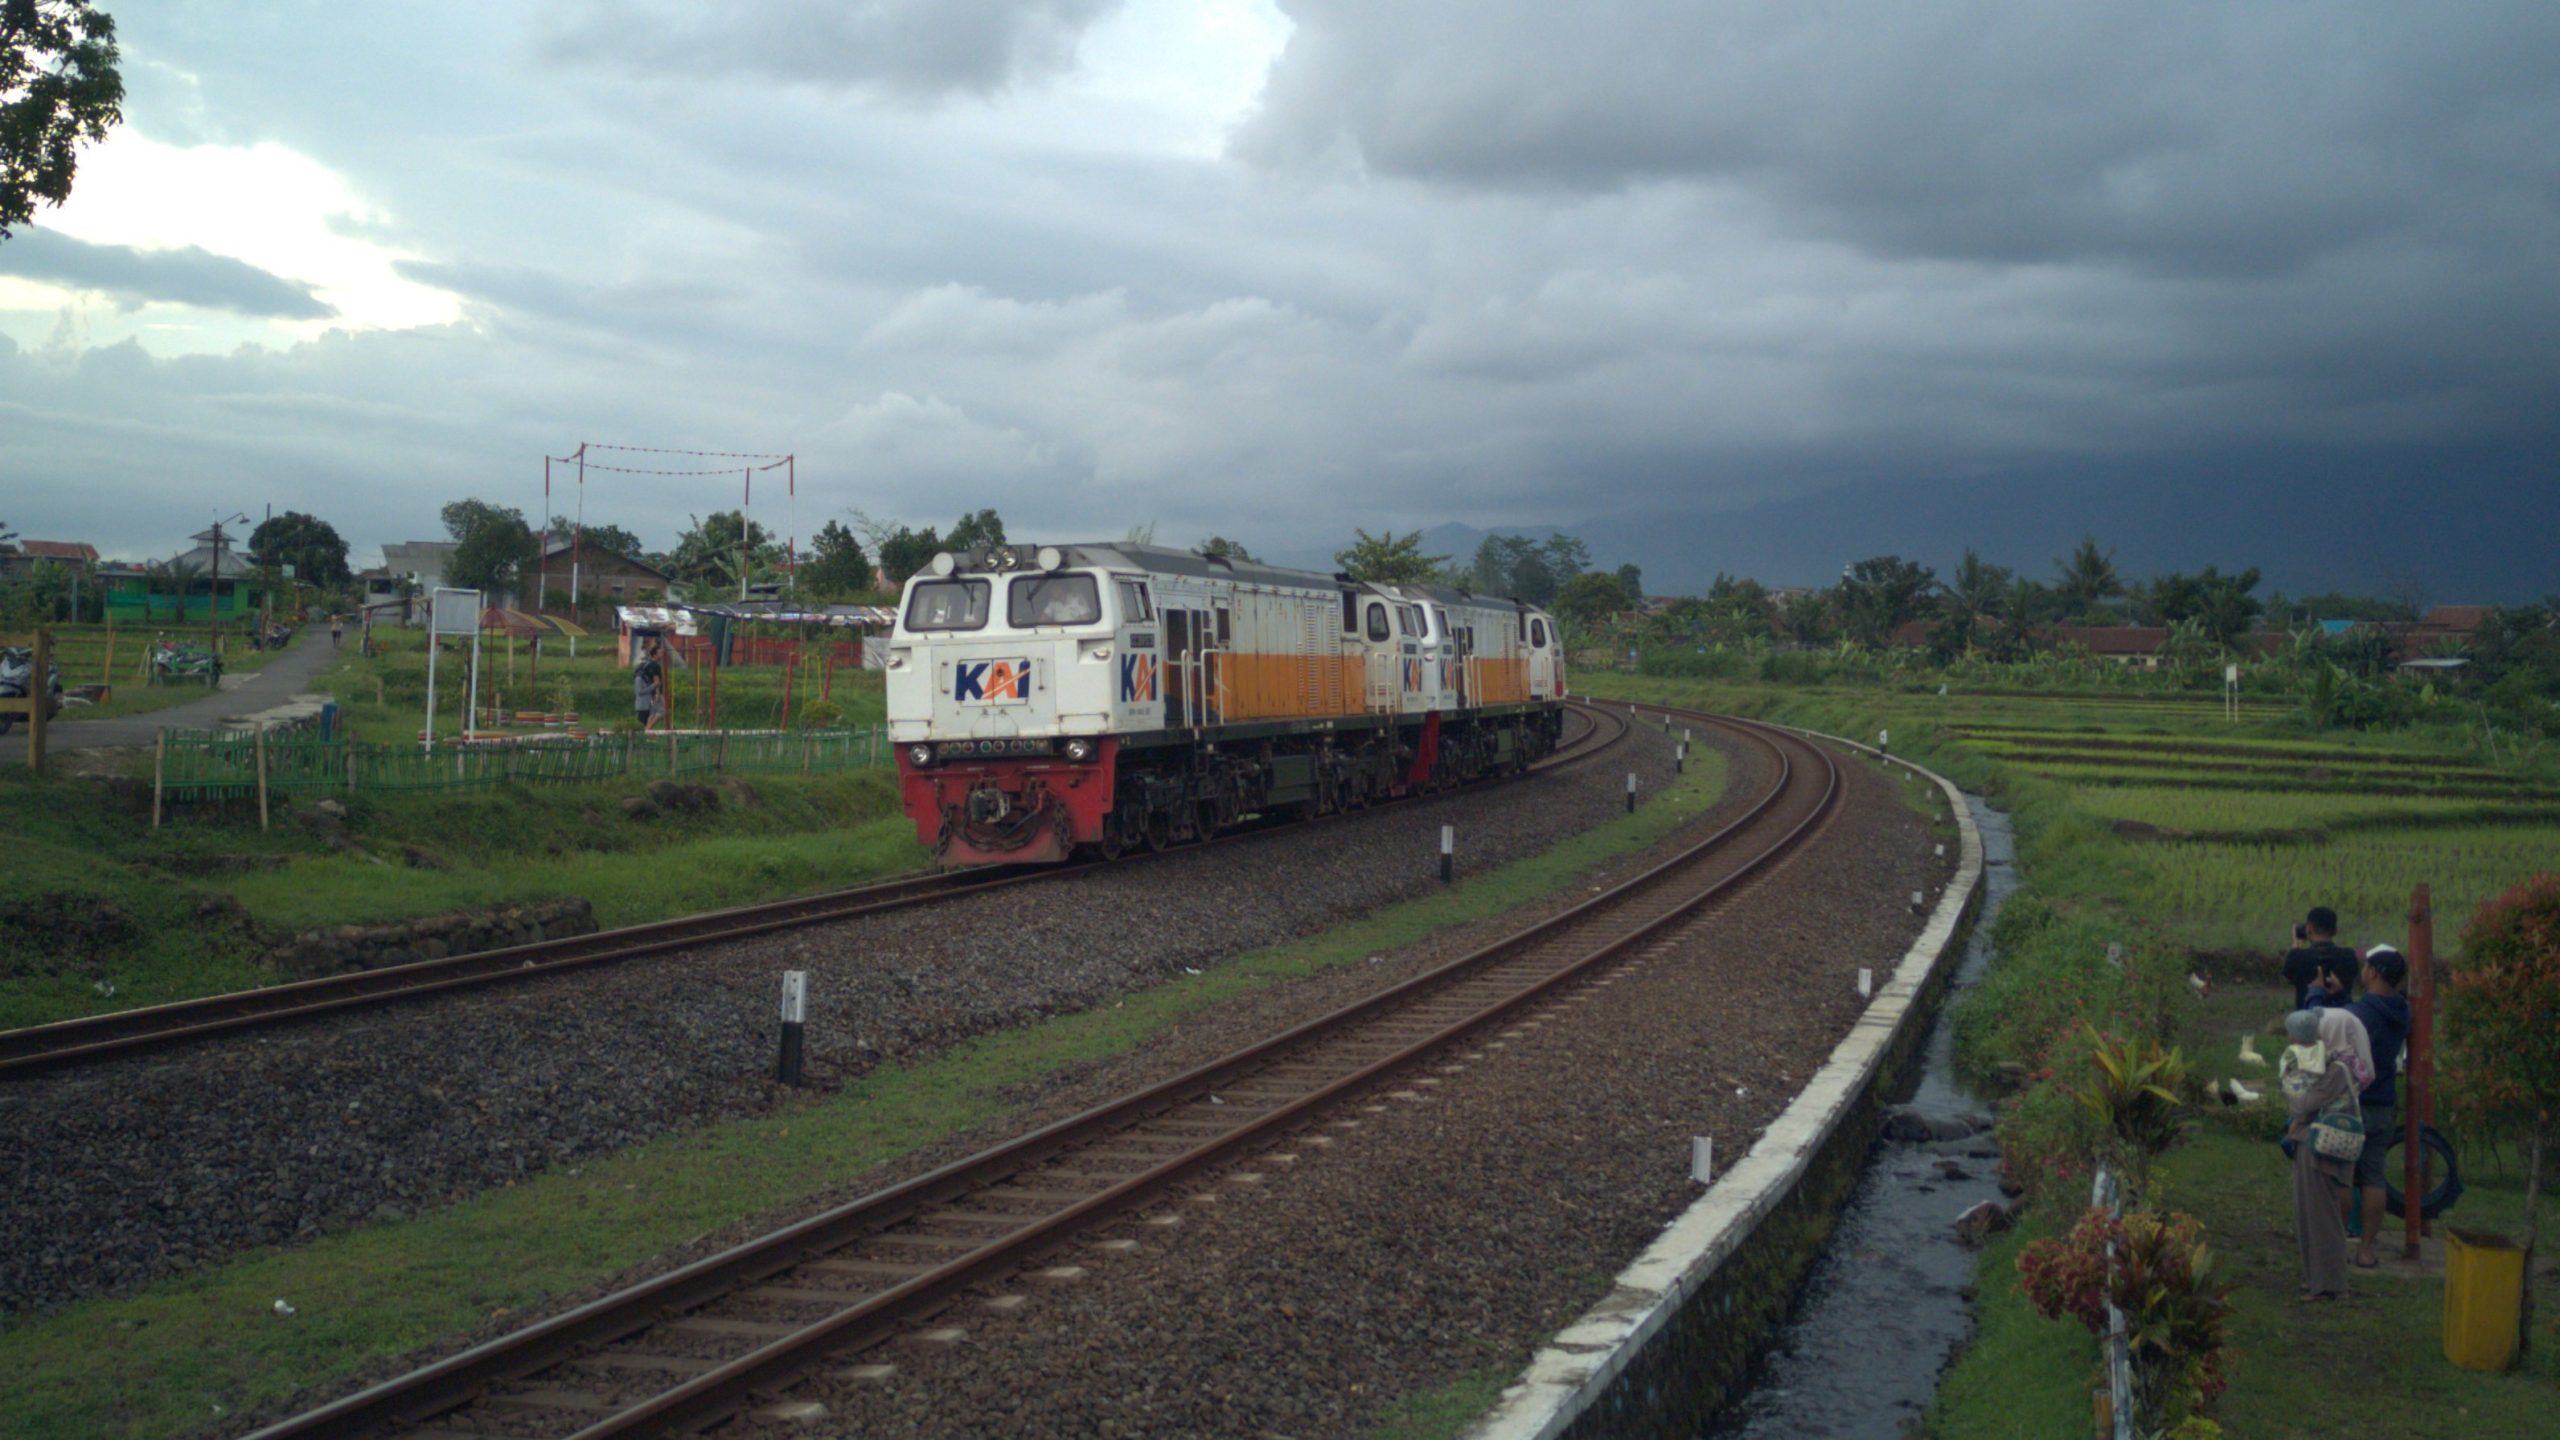 Lokomotif CC 206 13 39 dan CC 206 43 kembali setelah dinas uji beban jembatan.